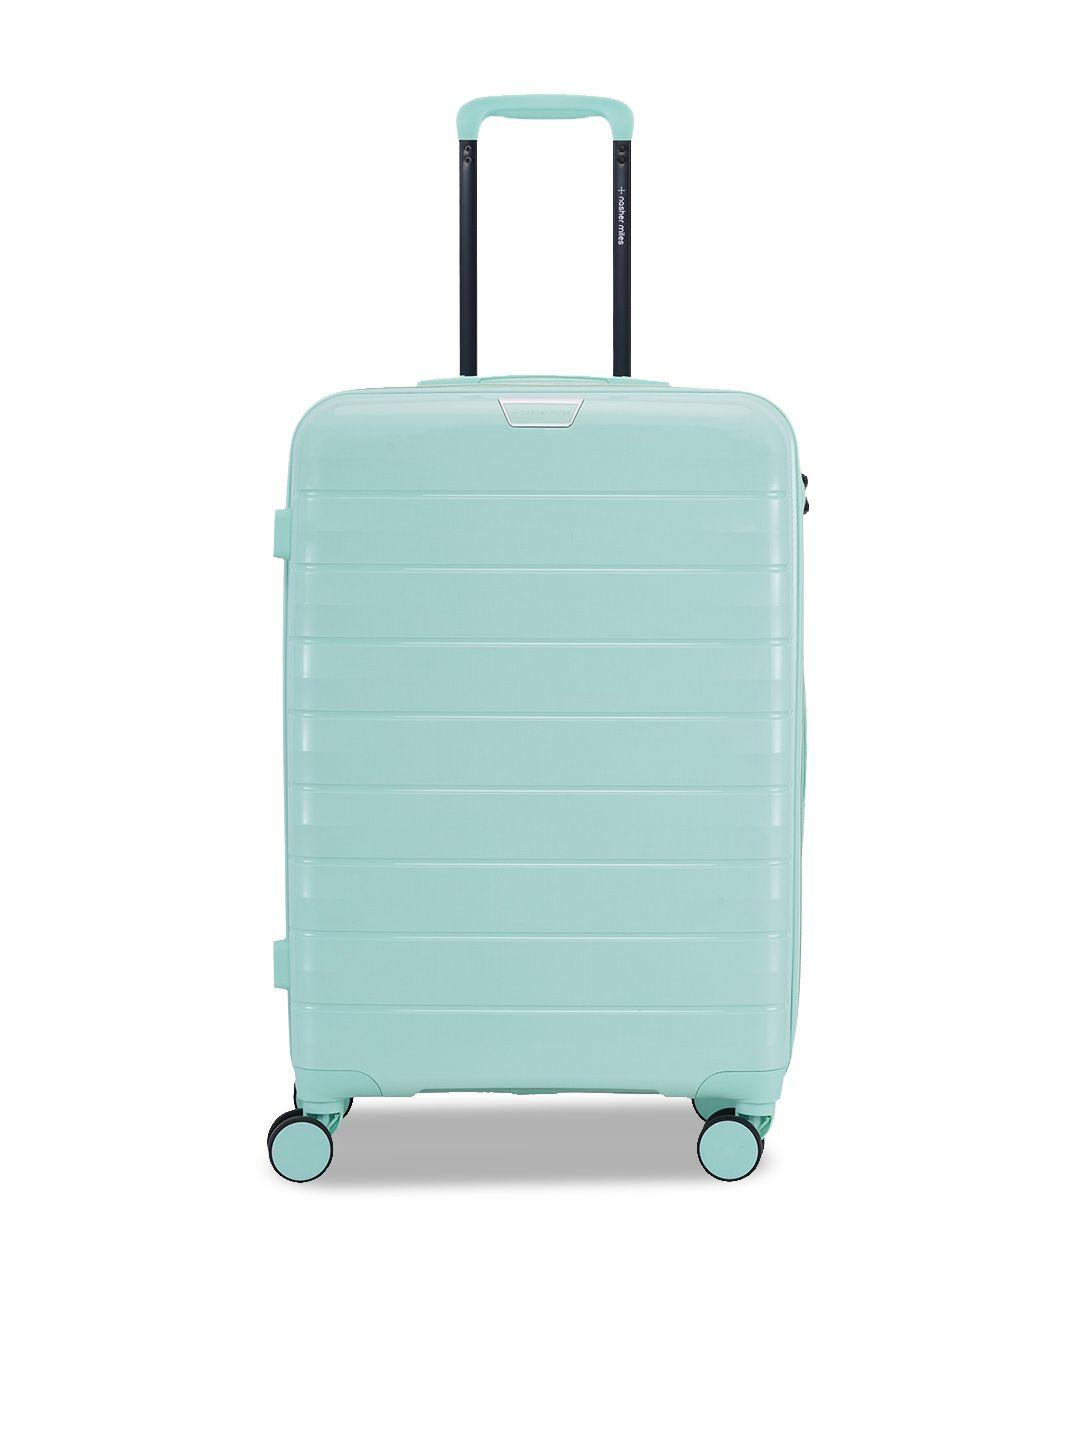 nasher miles vienna hard-sided medium trolley suitcase